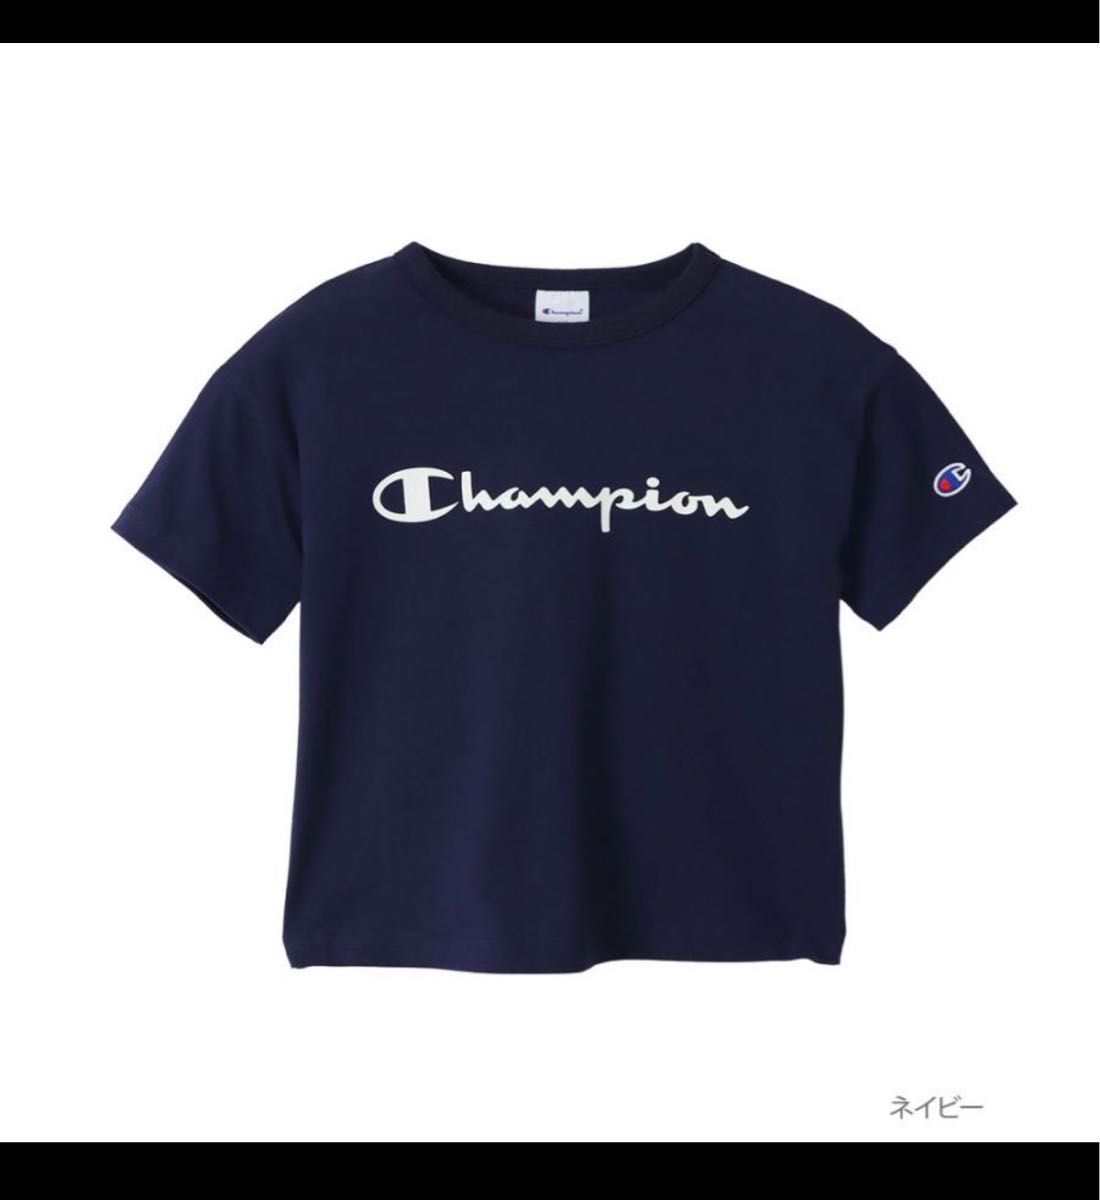 Champion チャンピオン Tシャツ 半袖 綿100% 子供服 男の子 女の子 キッズ 140サイズ  紺 ネイビー